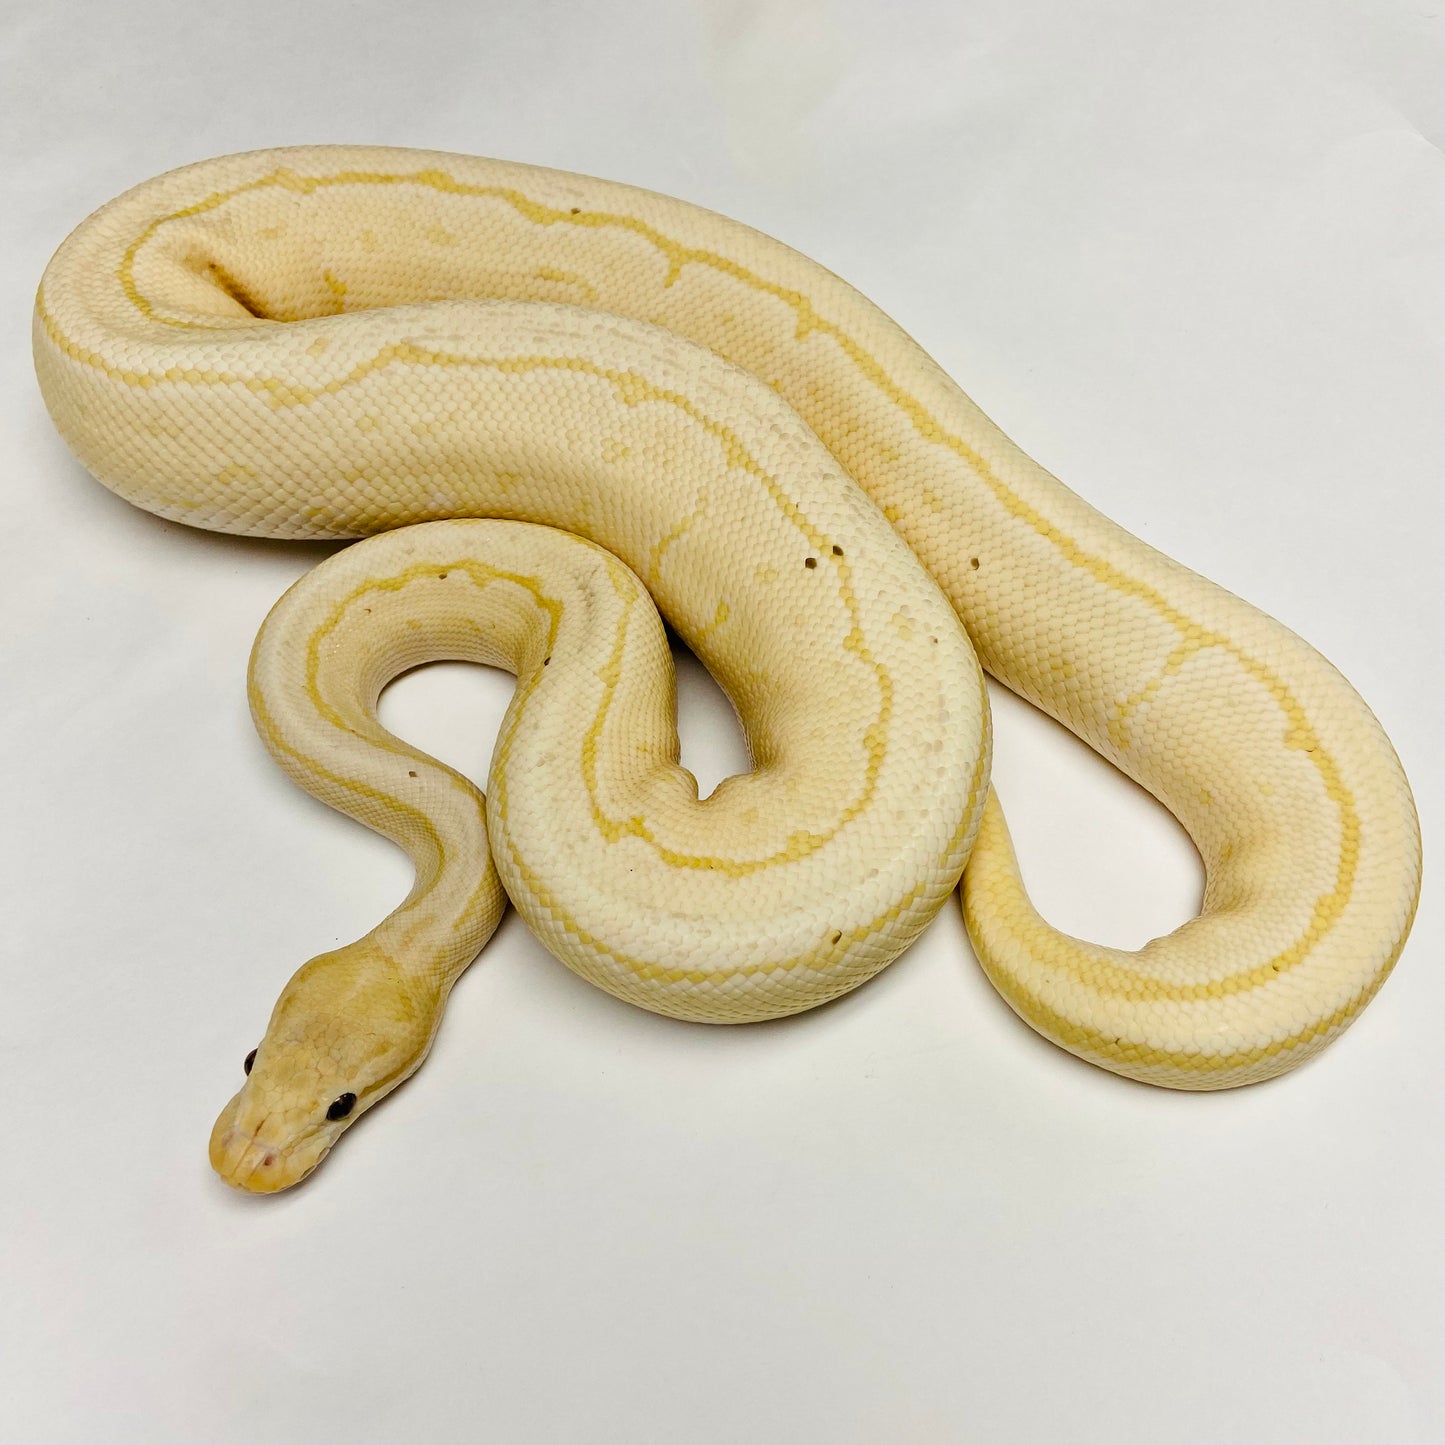 Adult Banana Fire Pinstripe Ball Python- Male